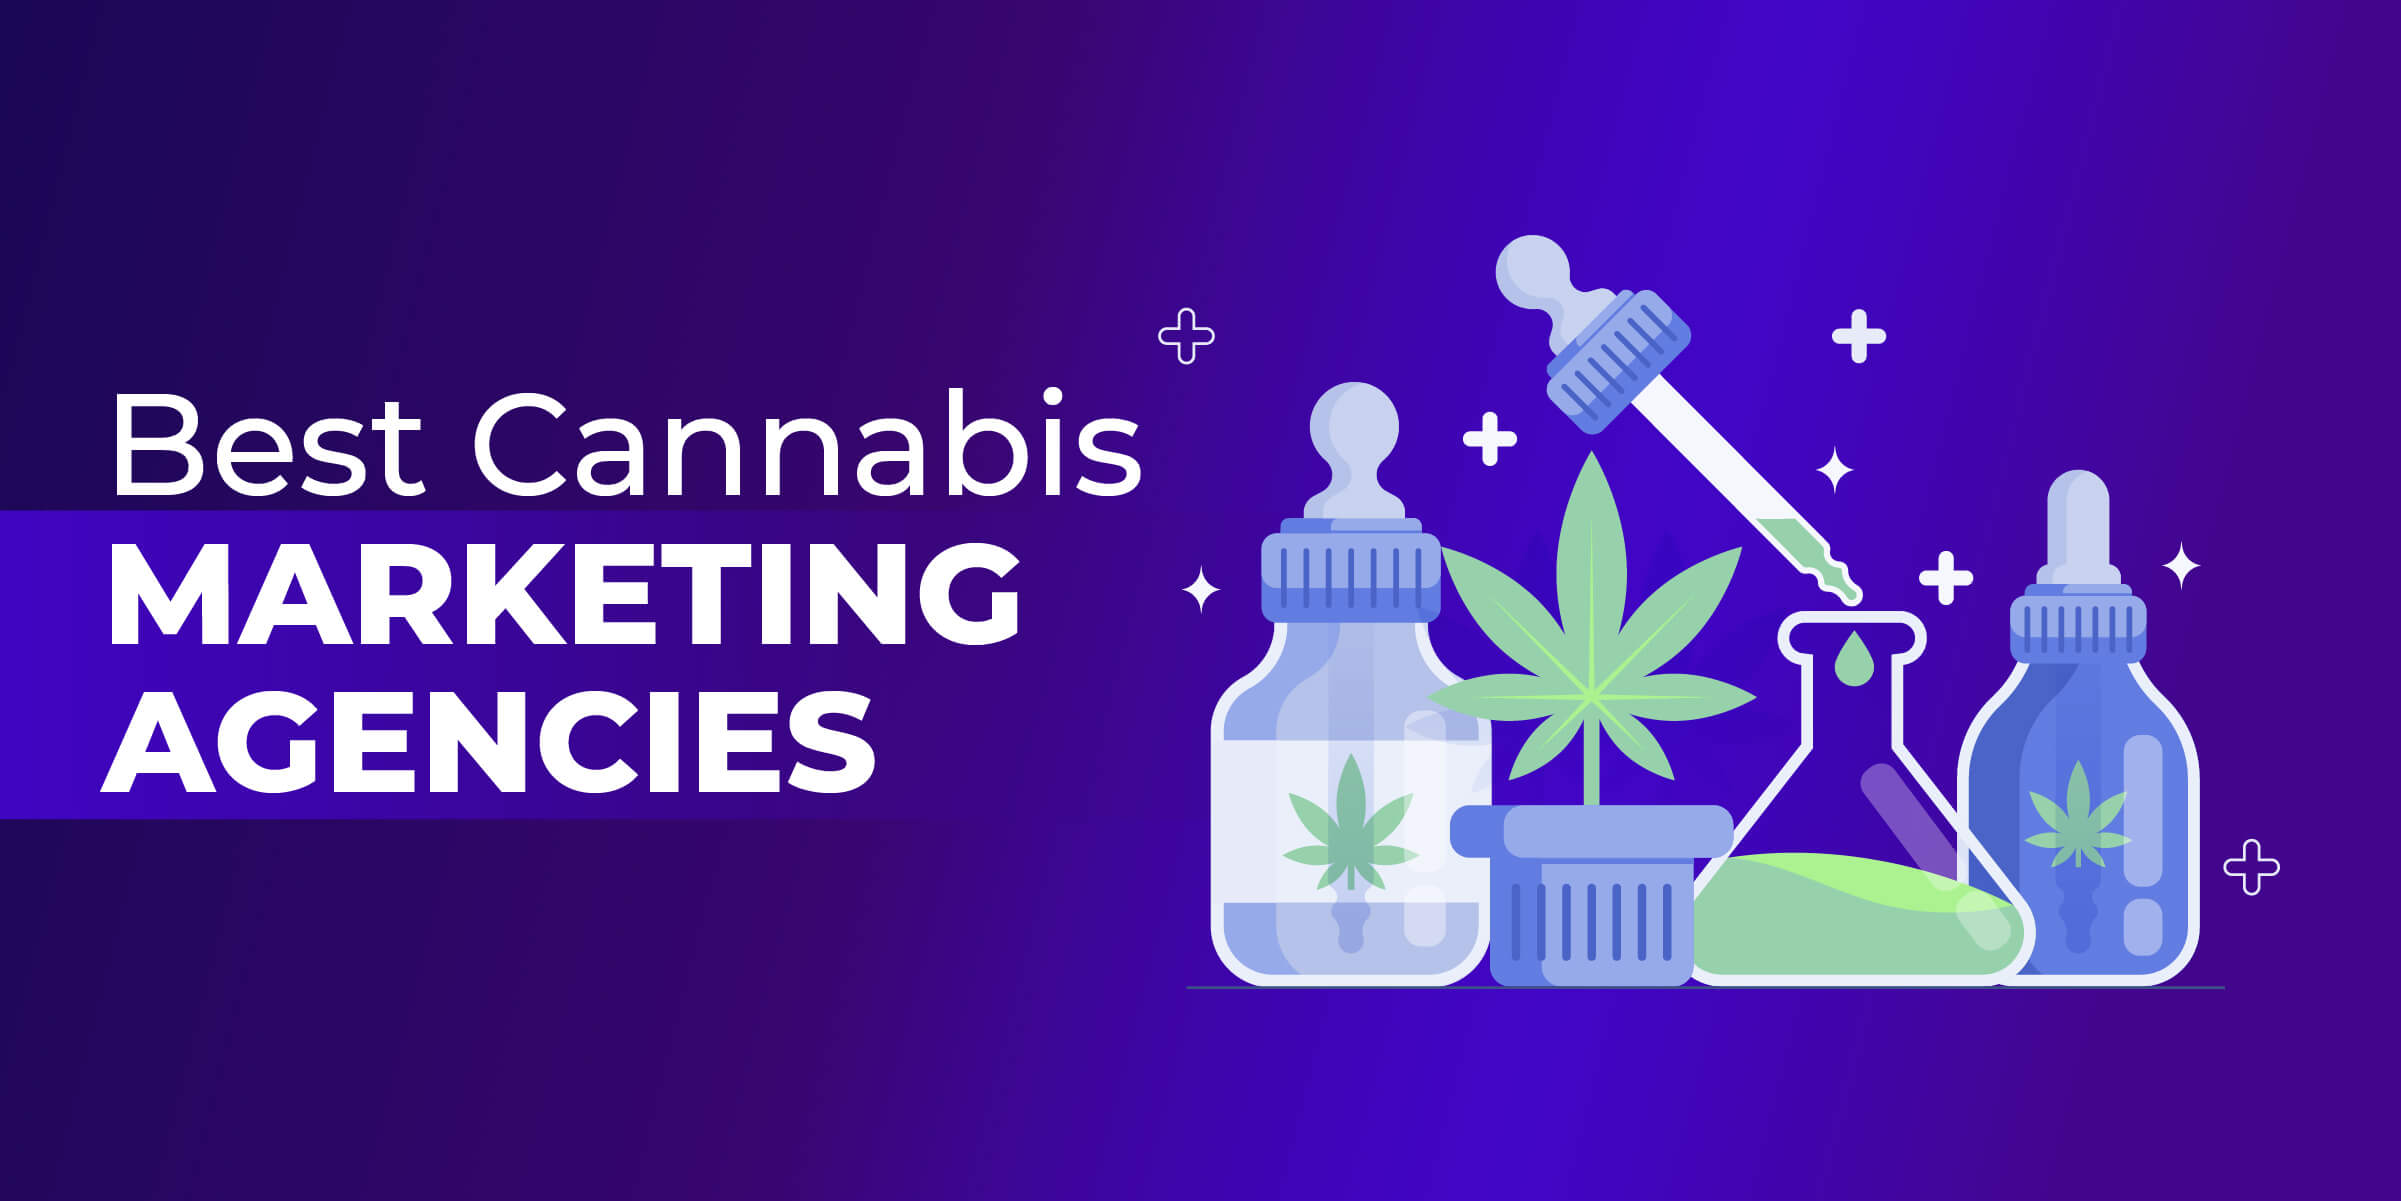 Best Cannabis Marketing Agencies